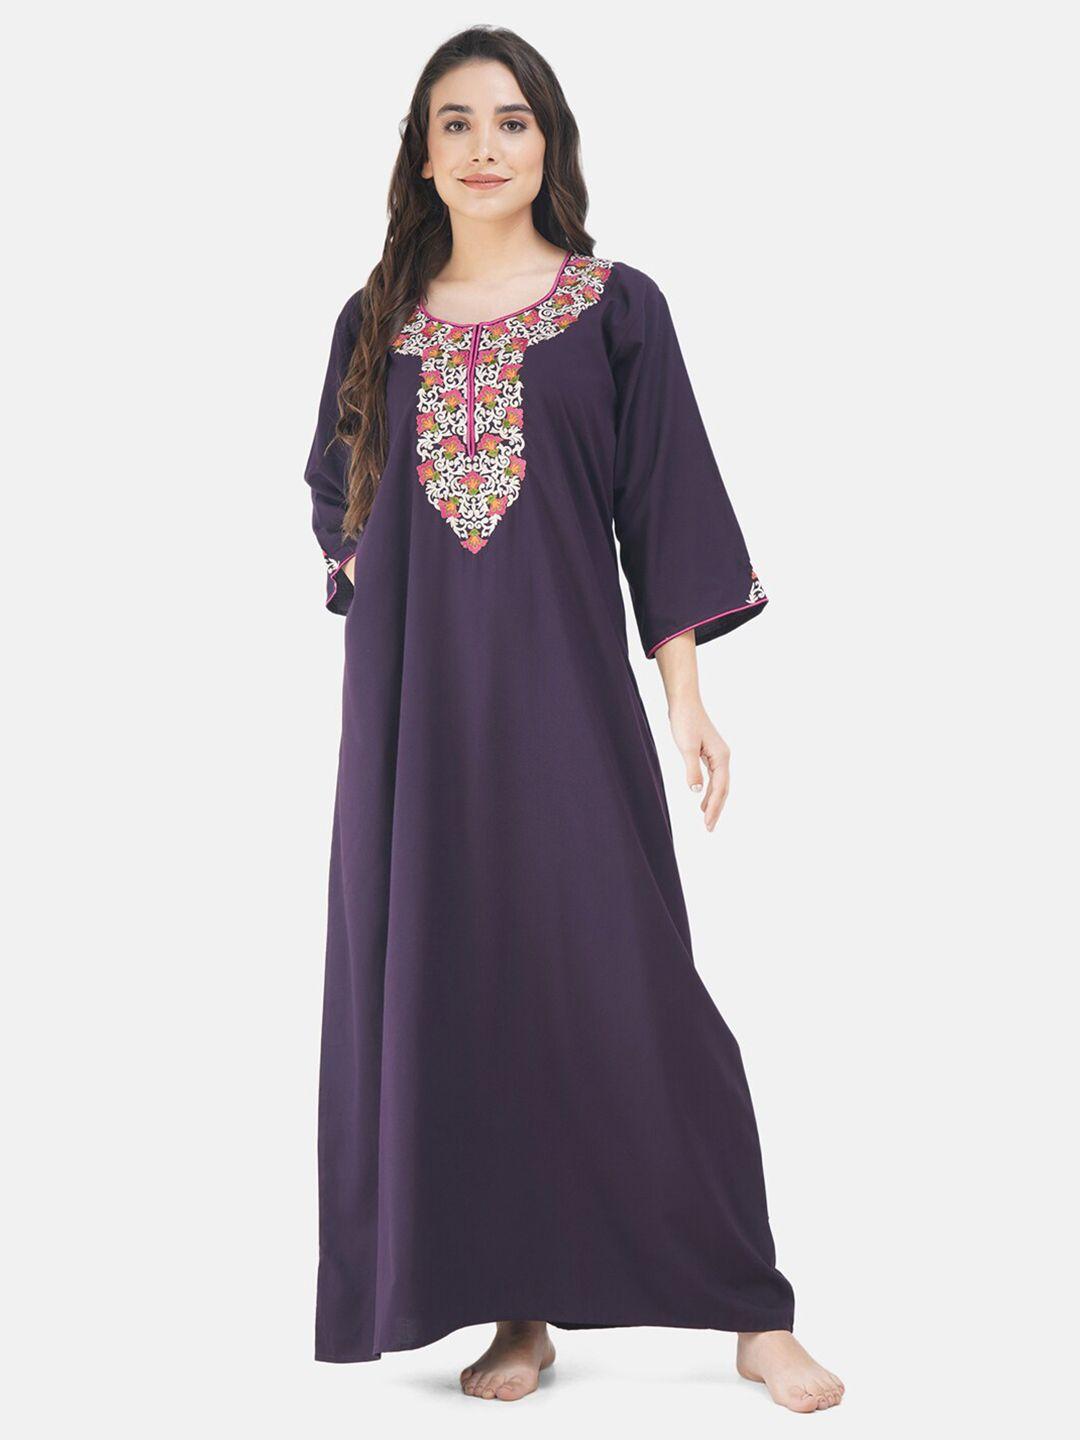 koi sleepwear purple embroidered maxi nightdress flower line contrast wine full